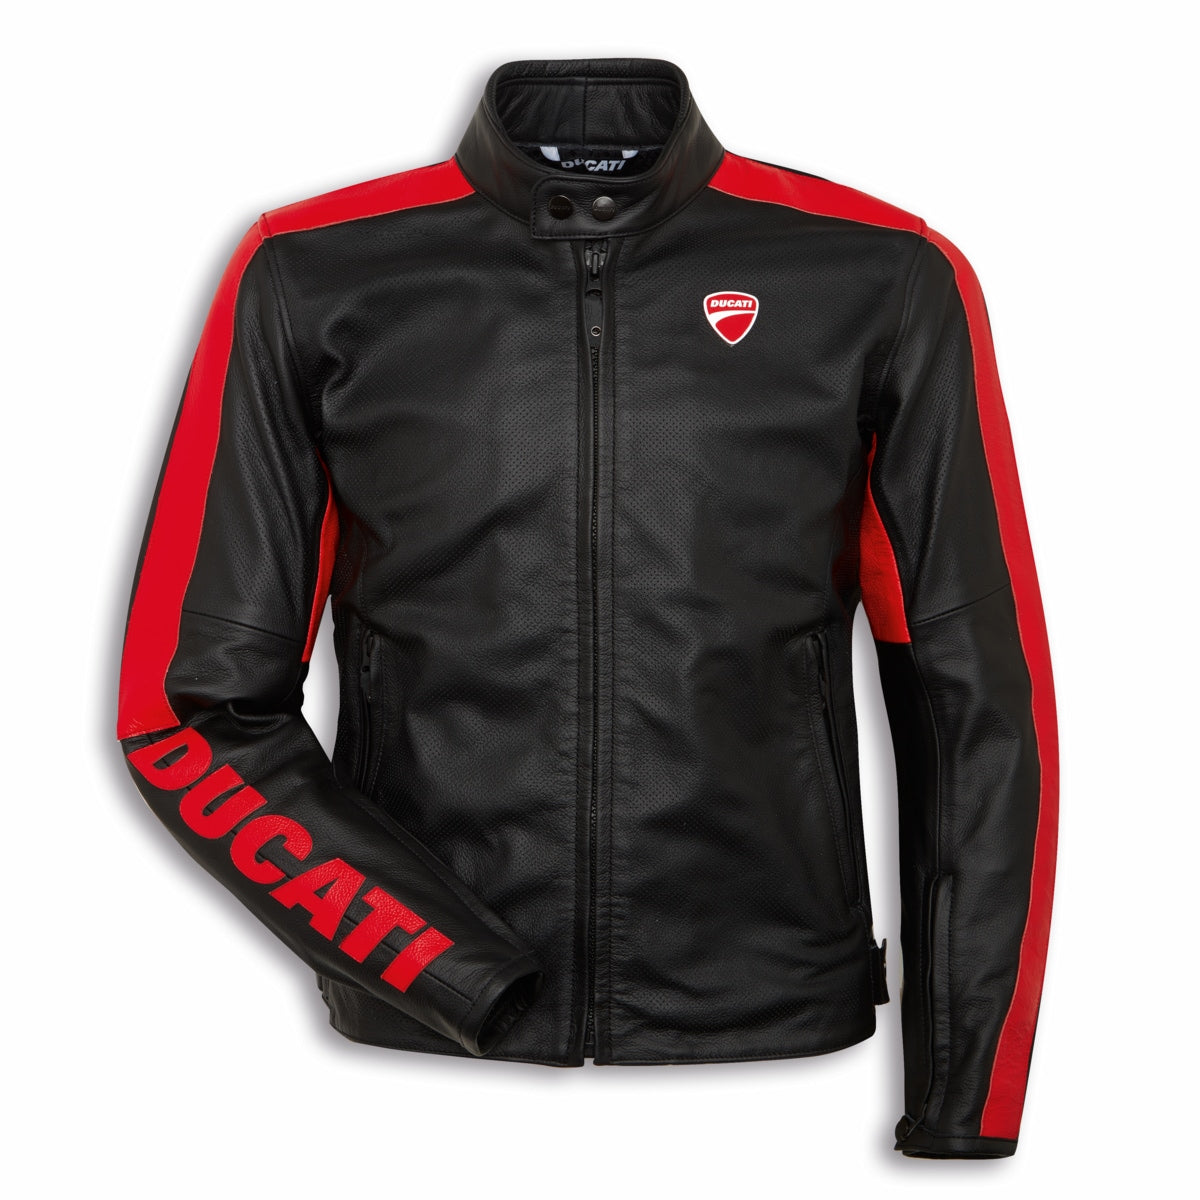 Ducati Company C4 Men's Leather jacket